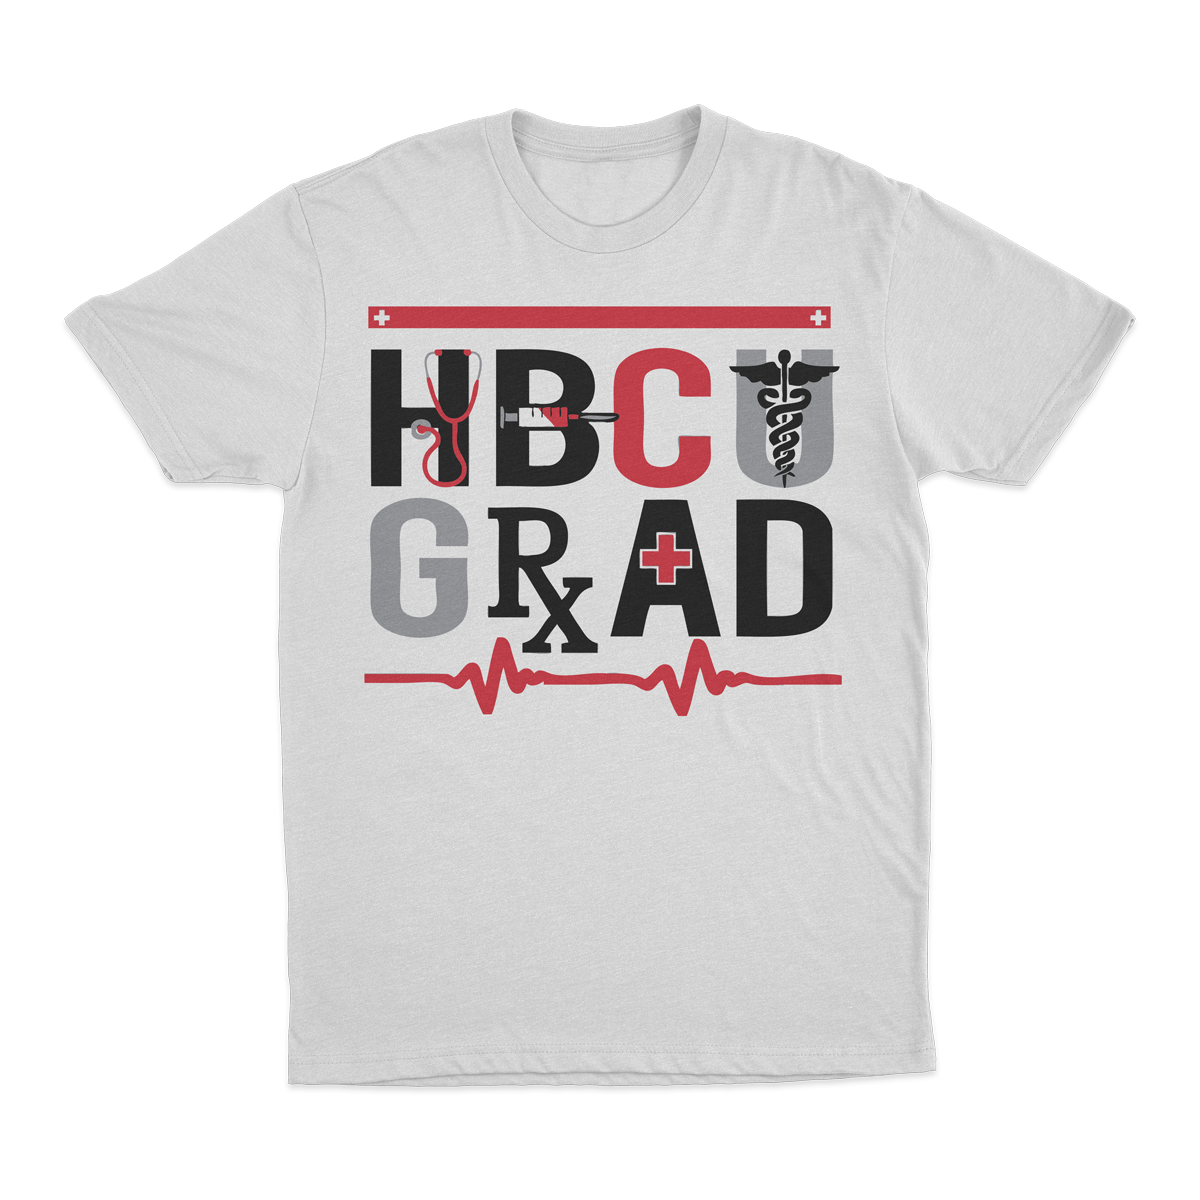 HBCU GRAD | Med Edition | Tshirt - White